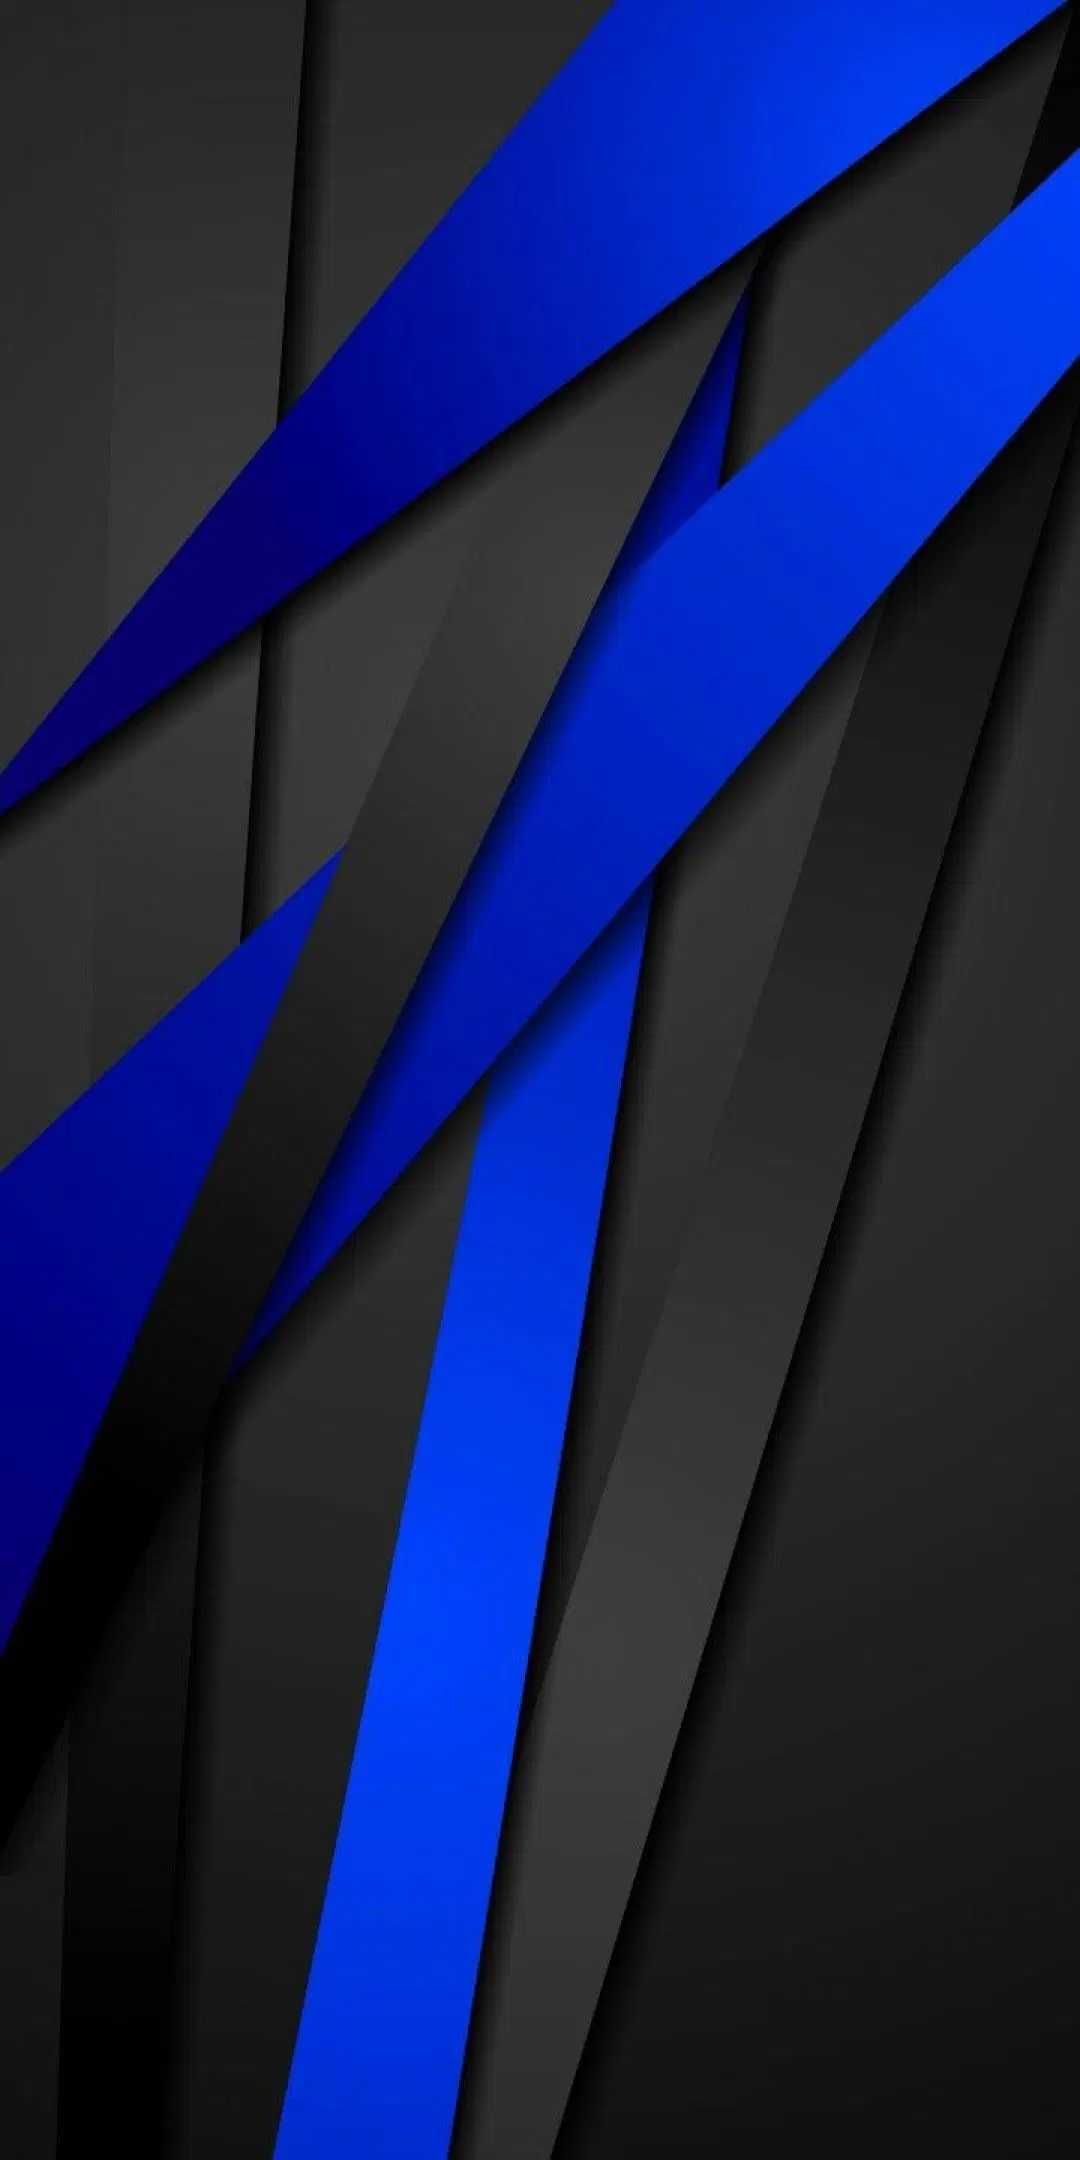 Black and Blue Wallpaper Discover more Black, Black and Blue, Blue, Blue and Black wallpape. Black and blue wallpaper, Android wallpaper black, Abstract wallpaper